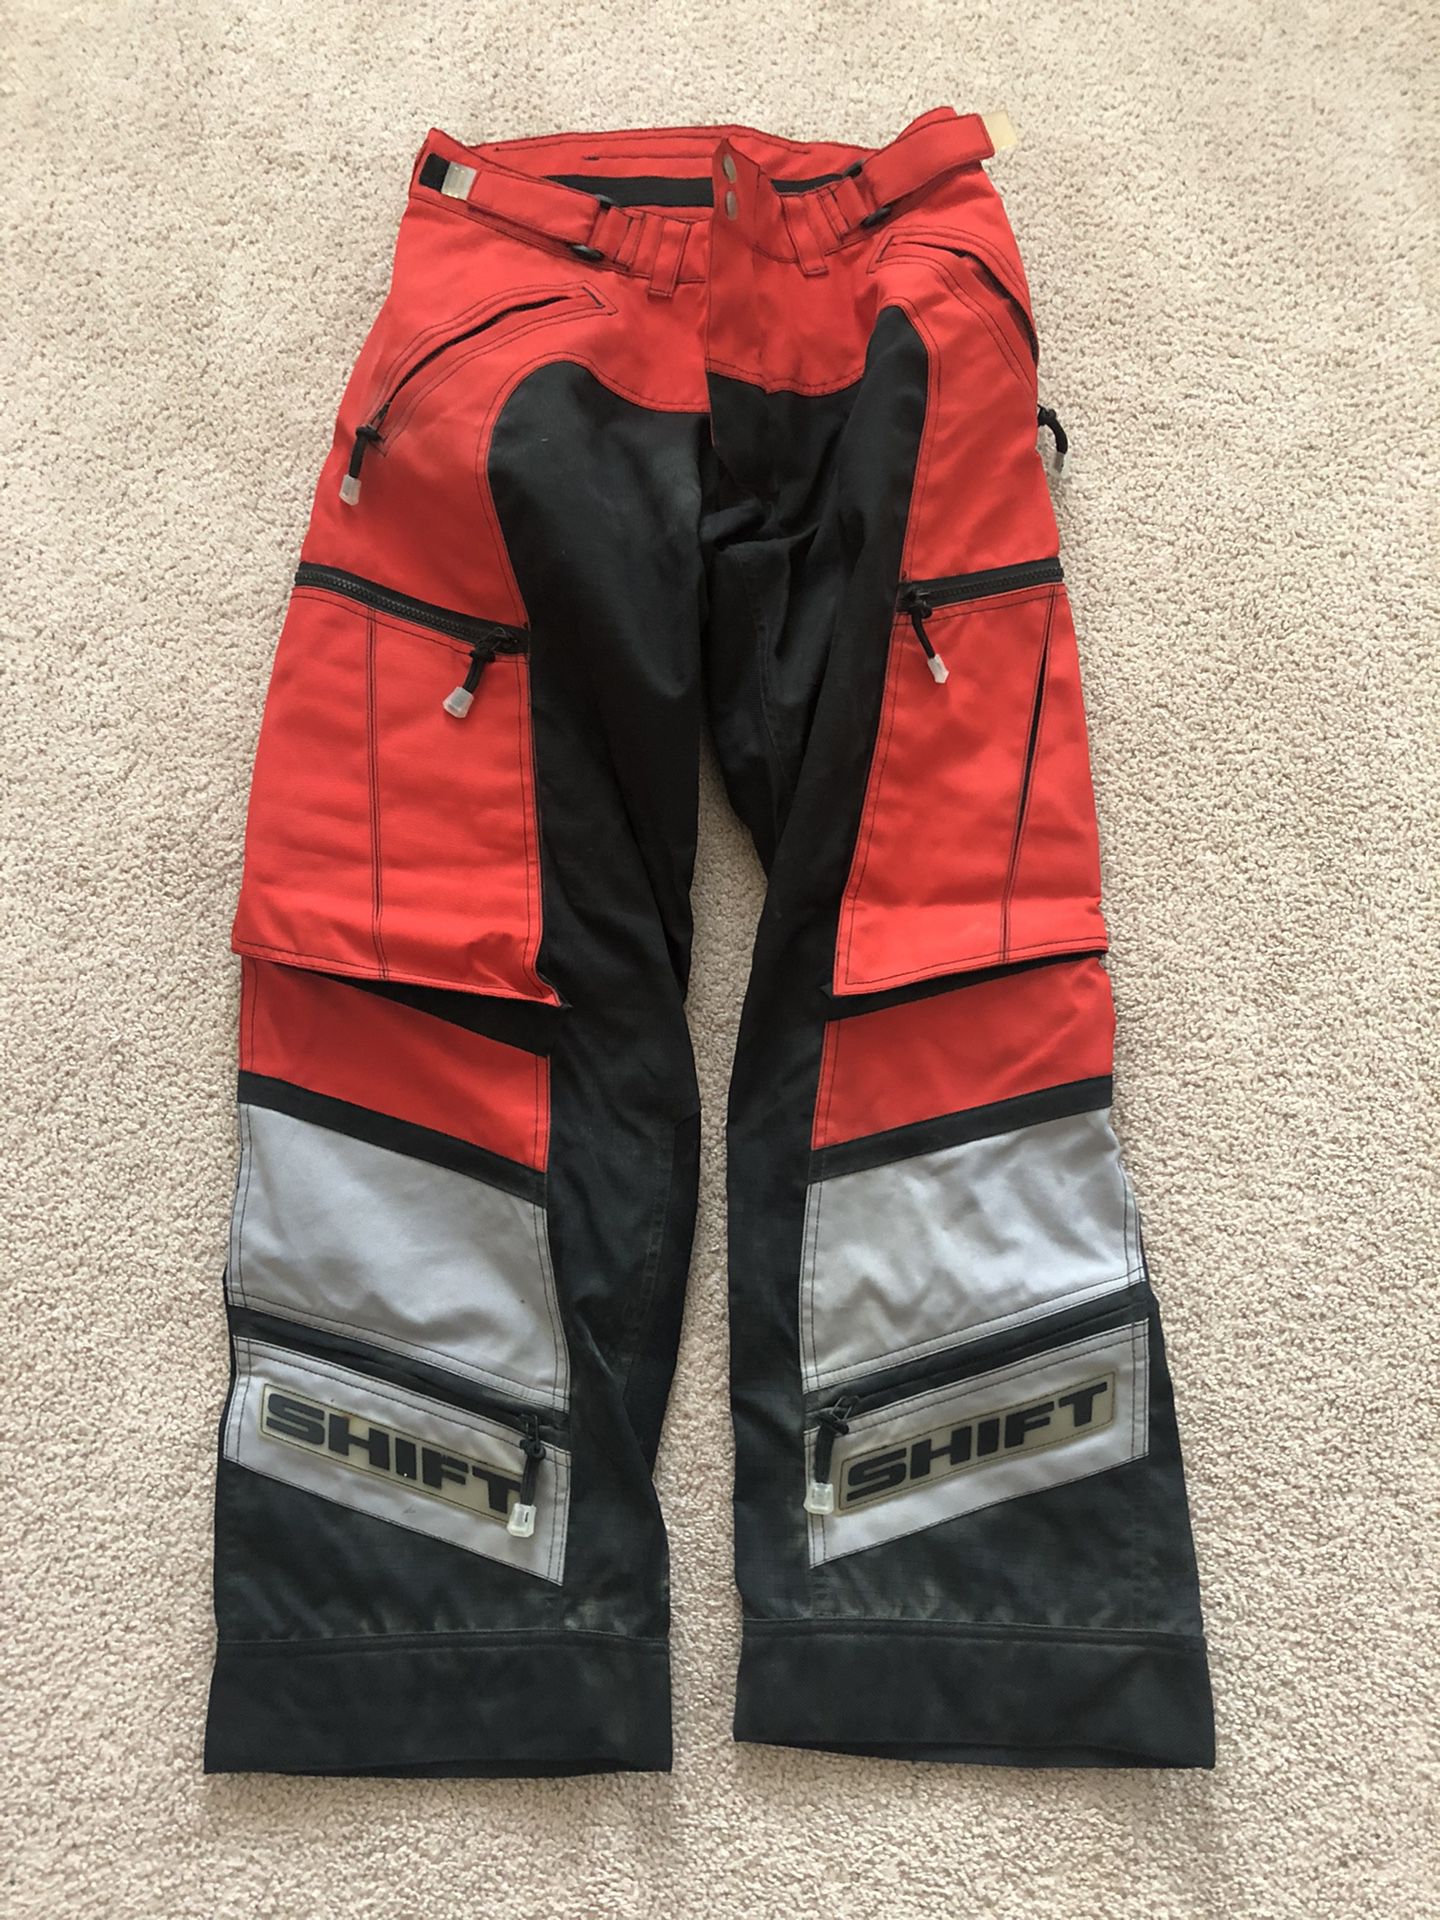 Shift motocross dirt bike pants size 36